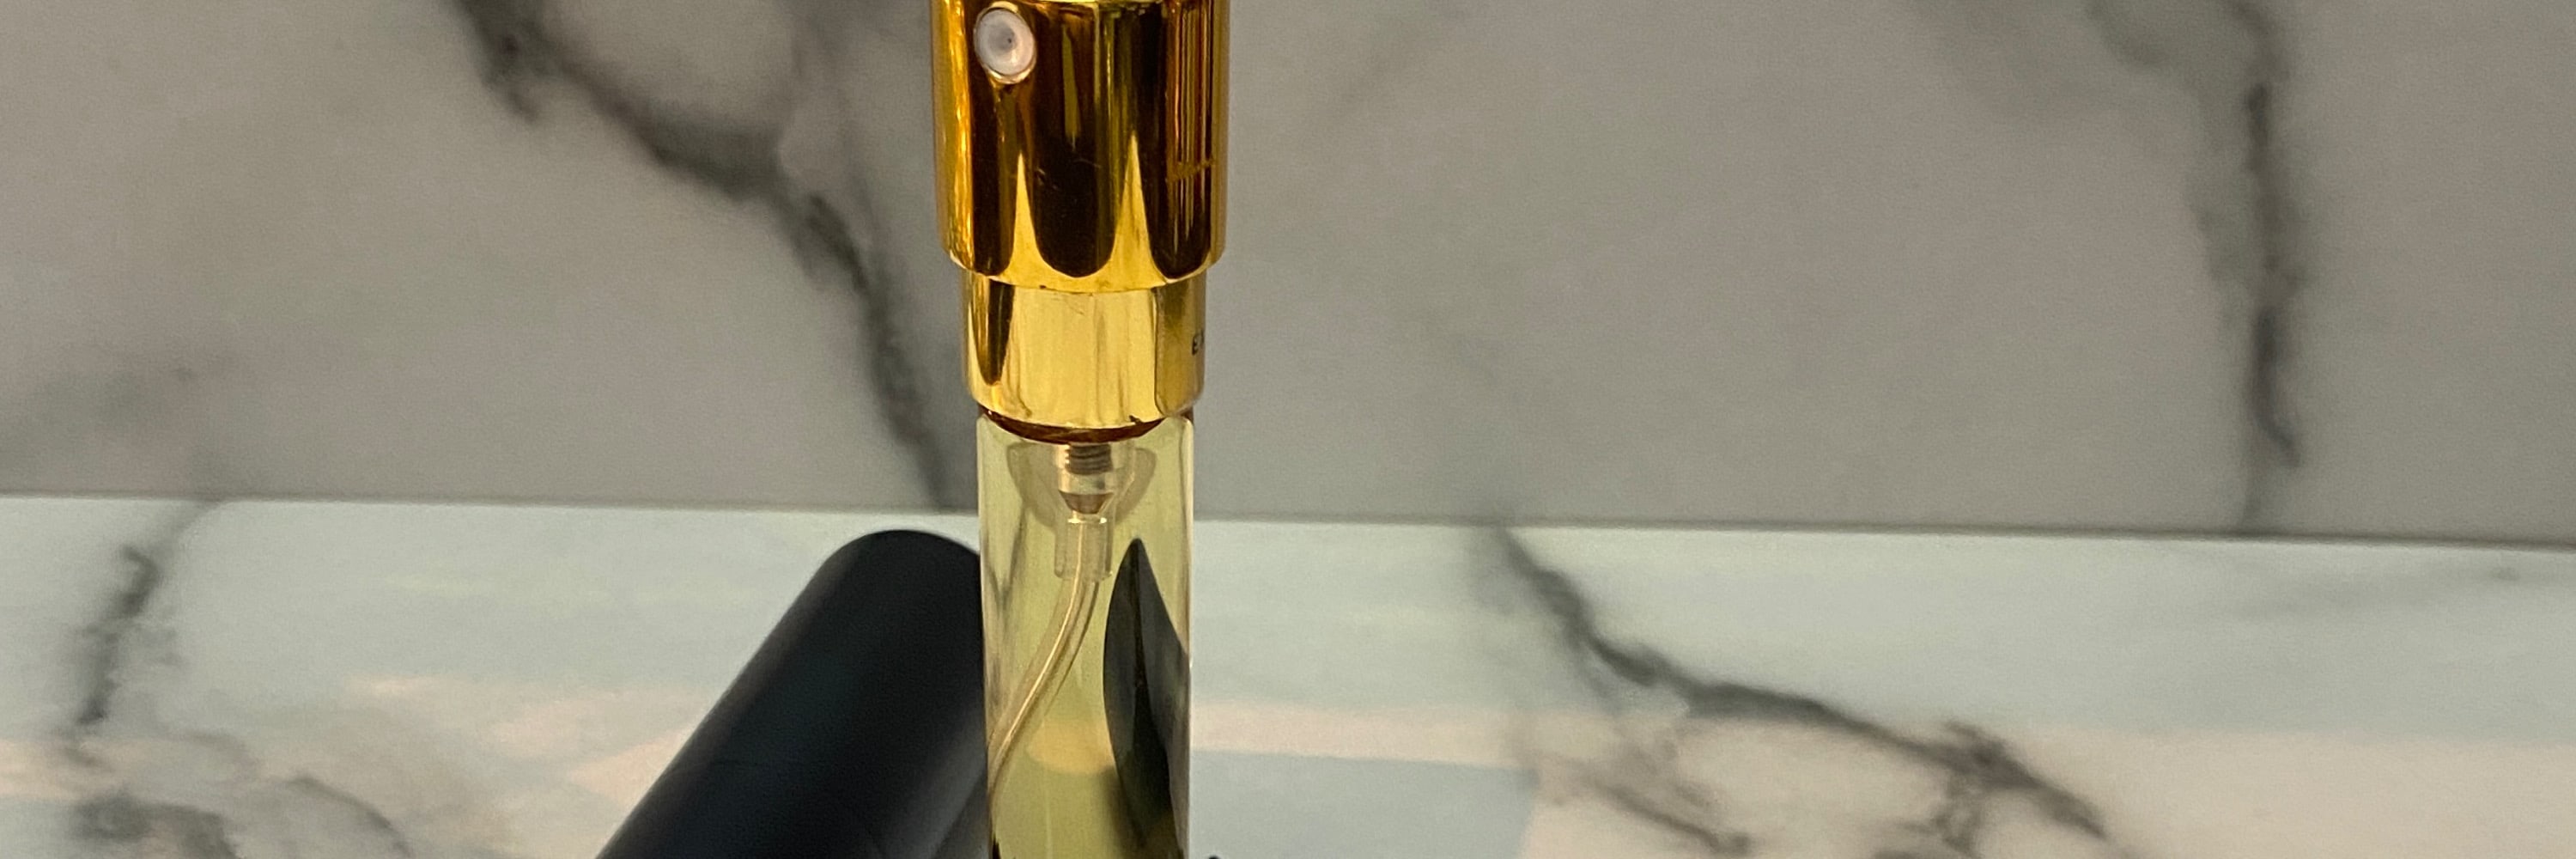 Nefertum Fragrances香水手工製作體驗